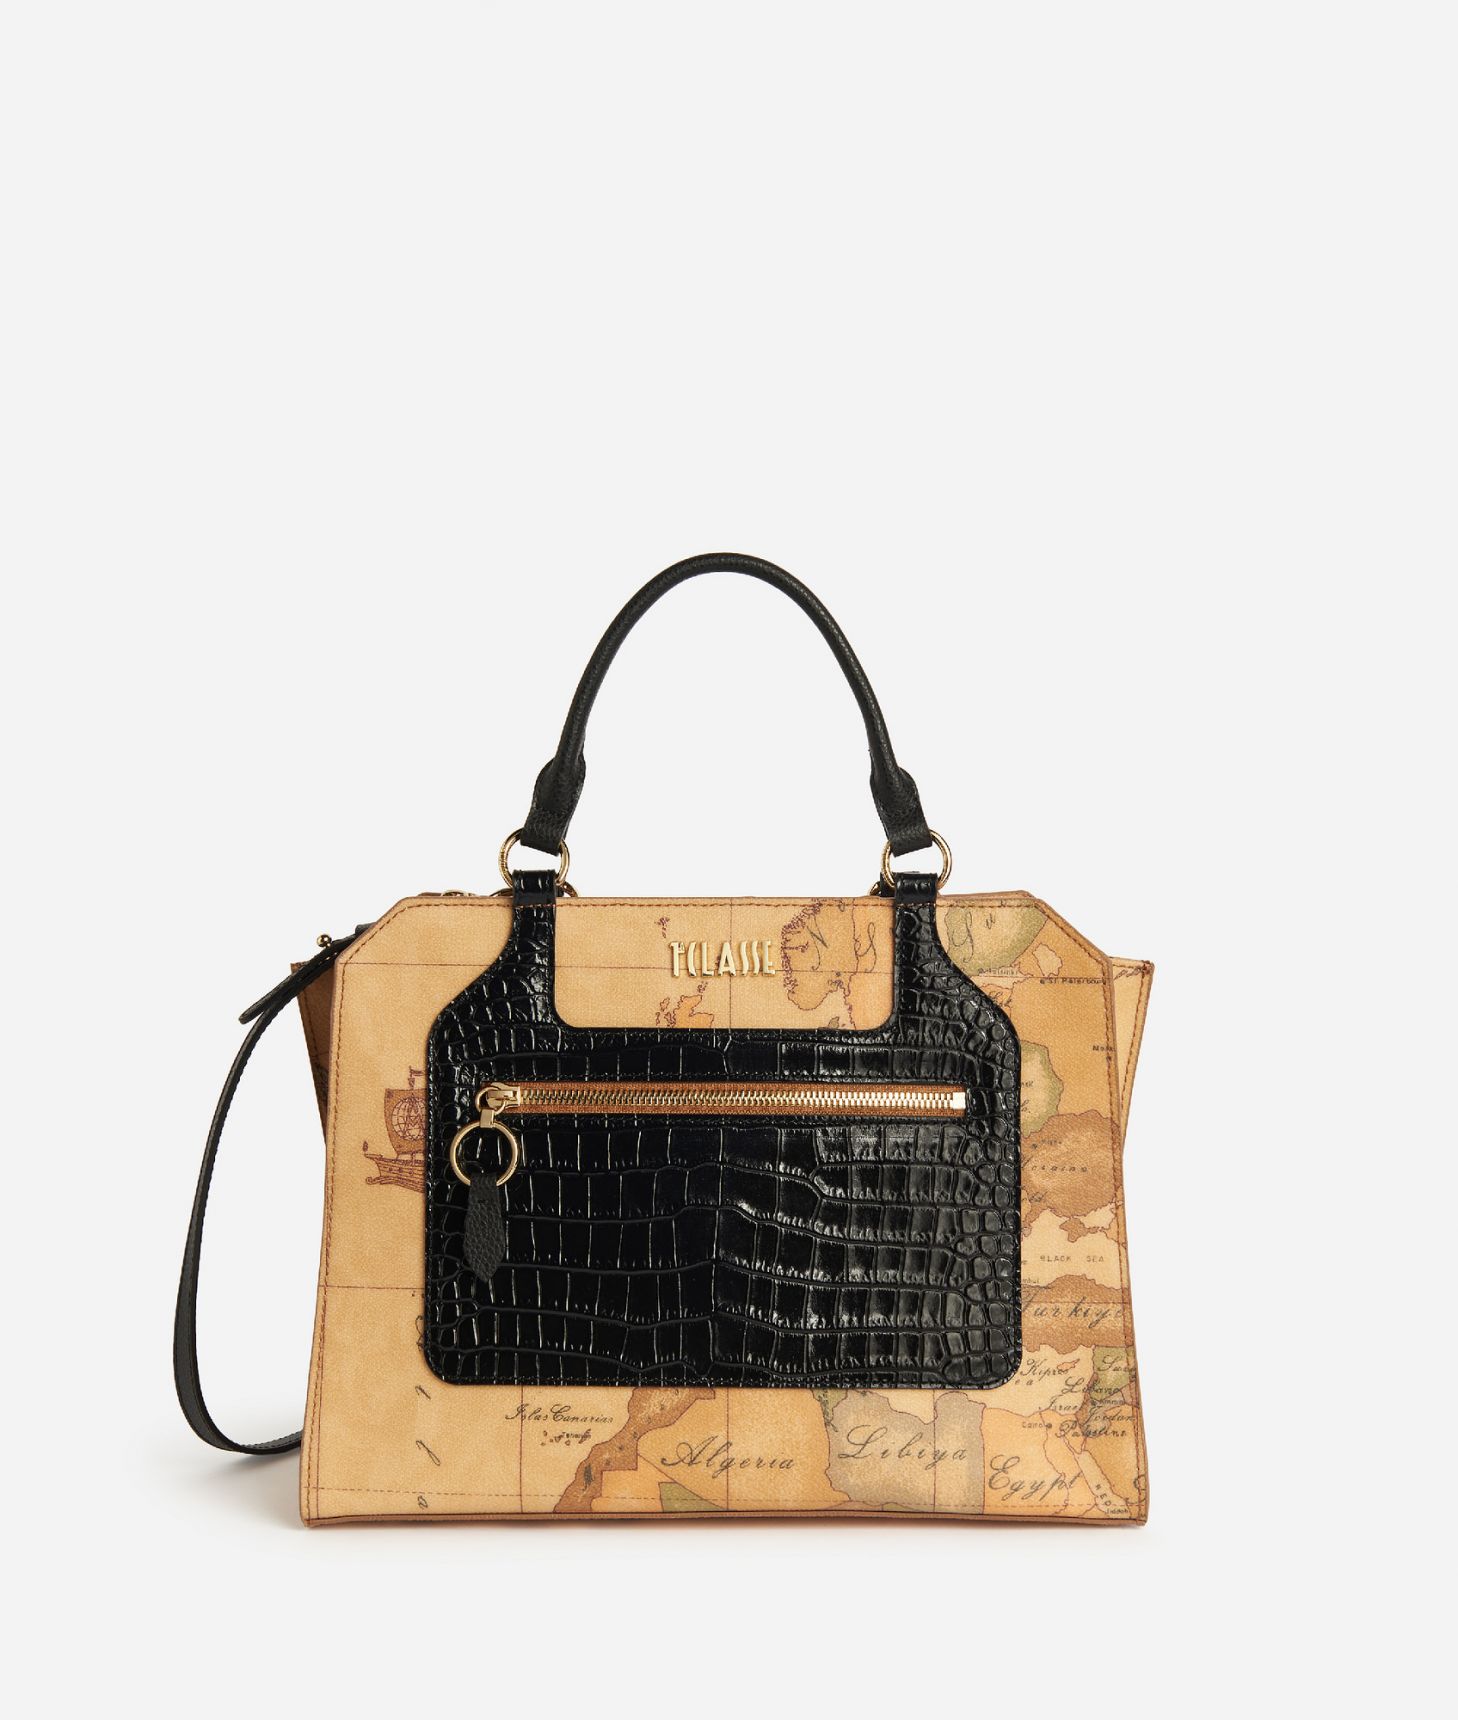 Kissme Bag handbag with crossbody strap Black,front